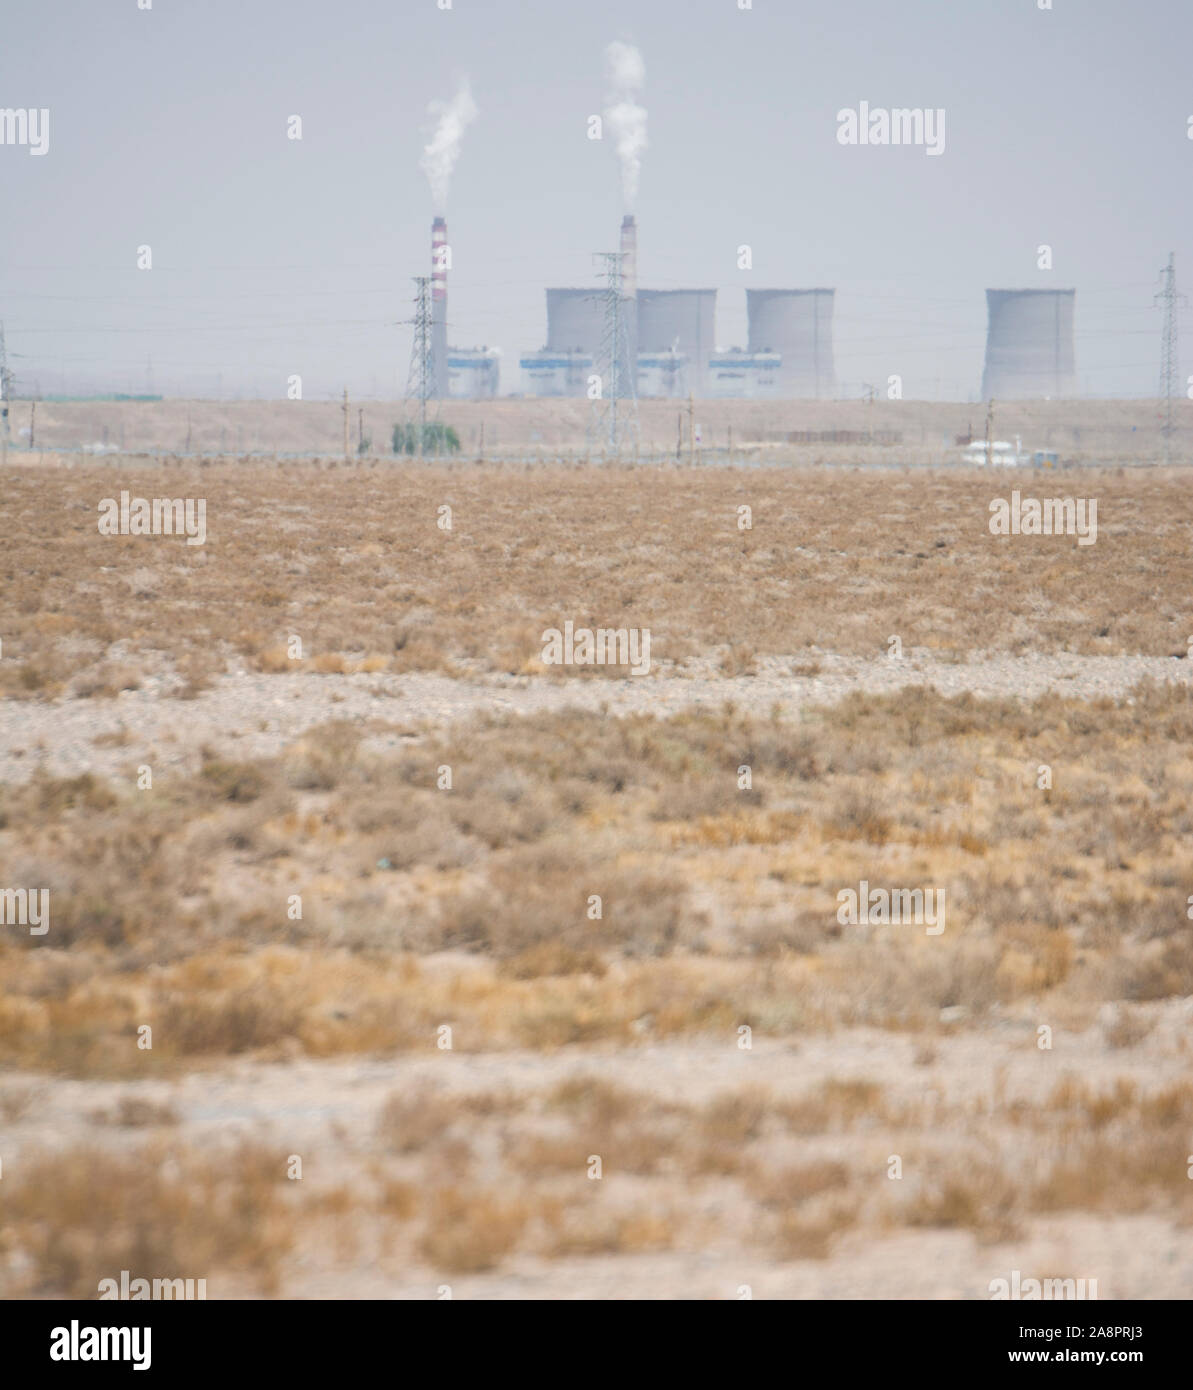 Enorme impianto industriale in mezzo al deserto, Jiayuguan, Cina Foto Stock